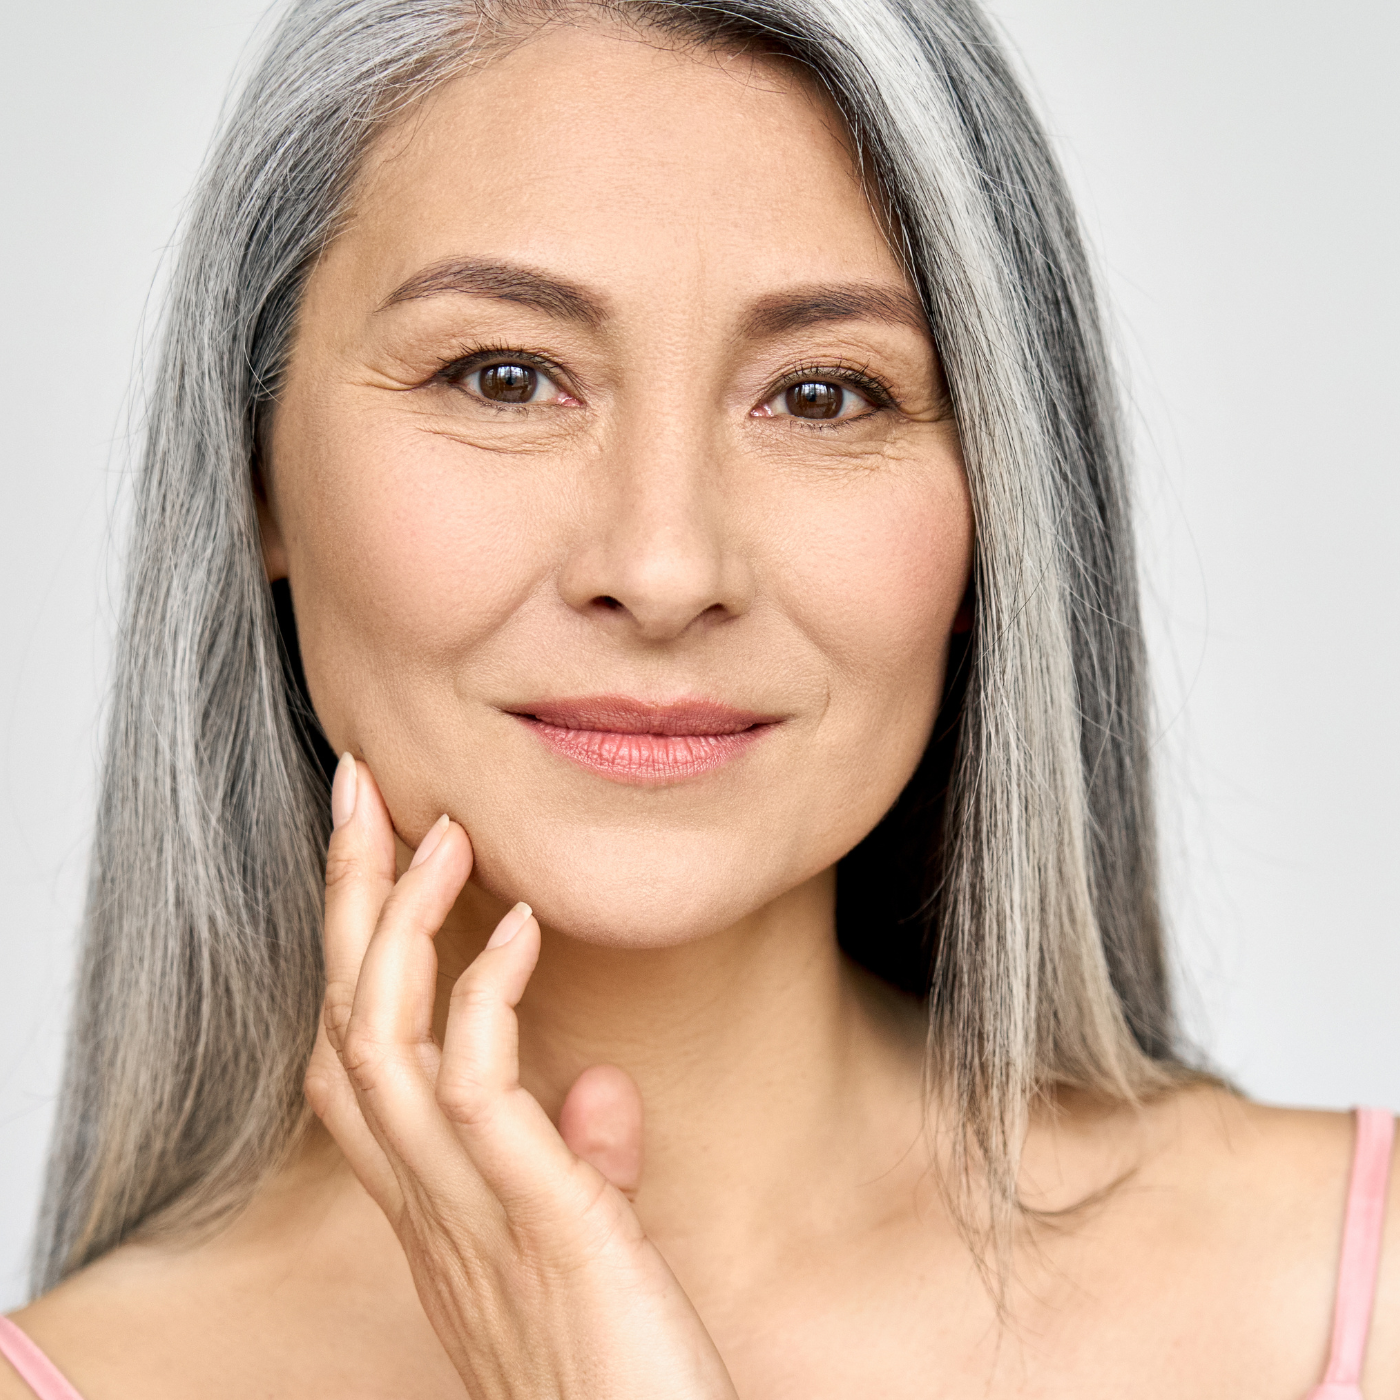 Asian Woman with Sensitive Skin